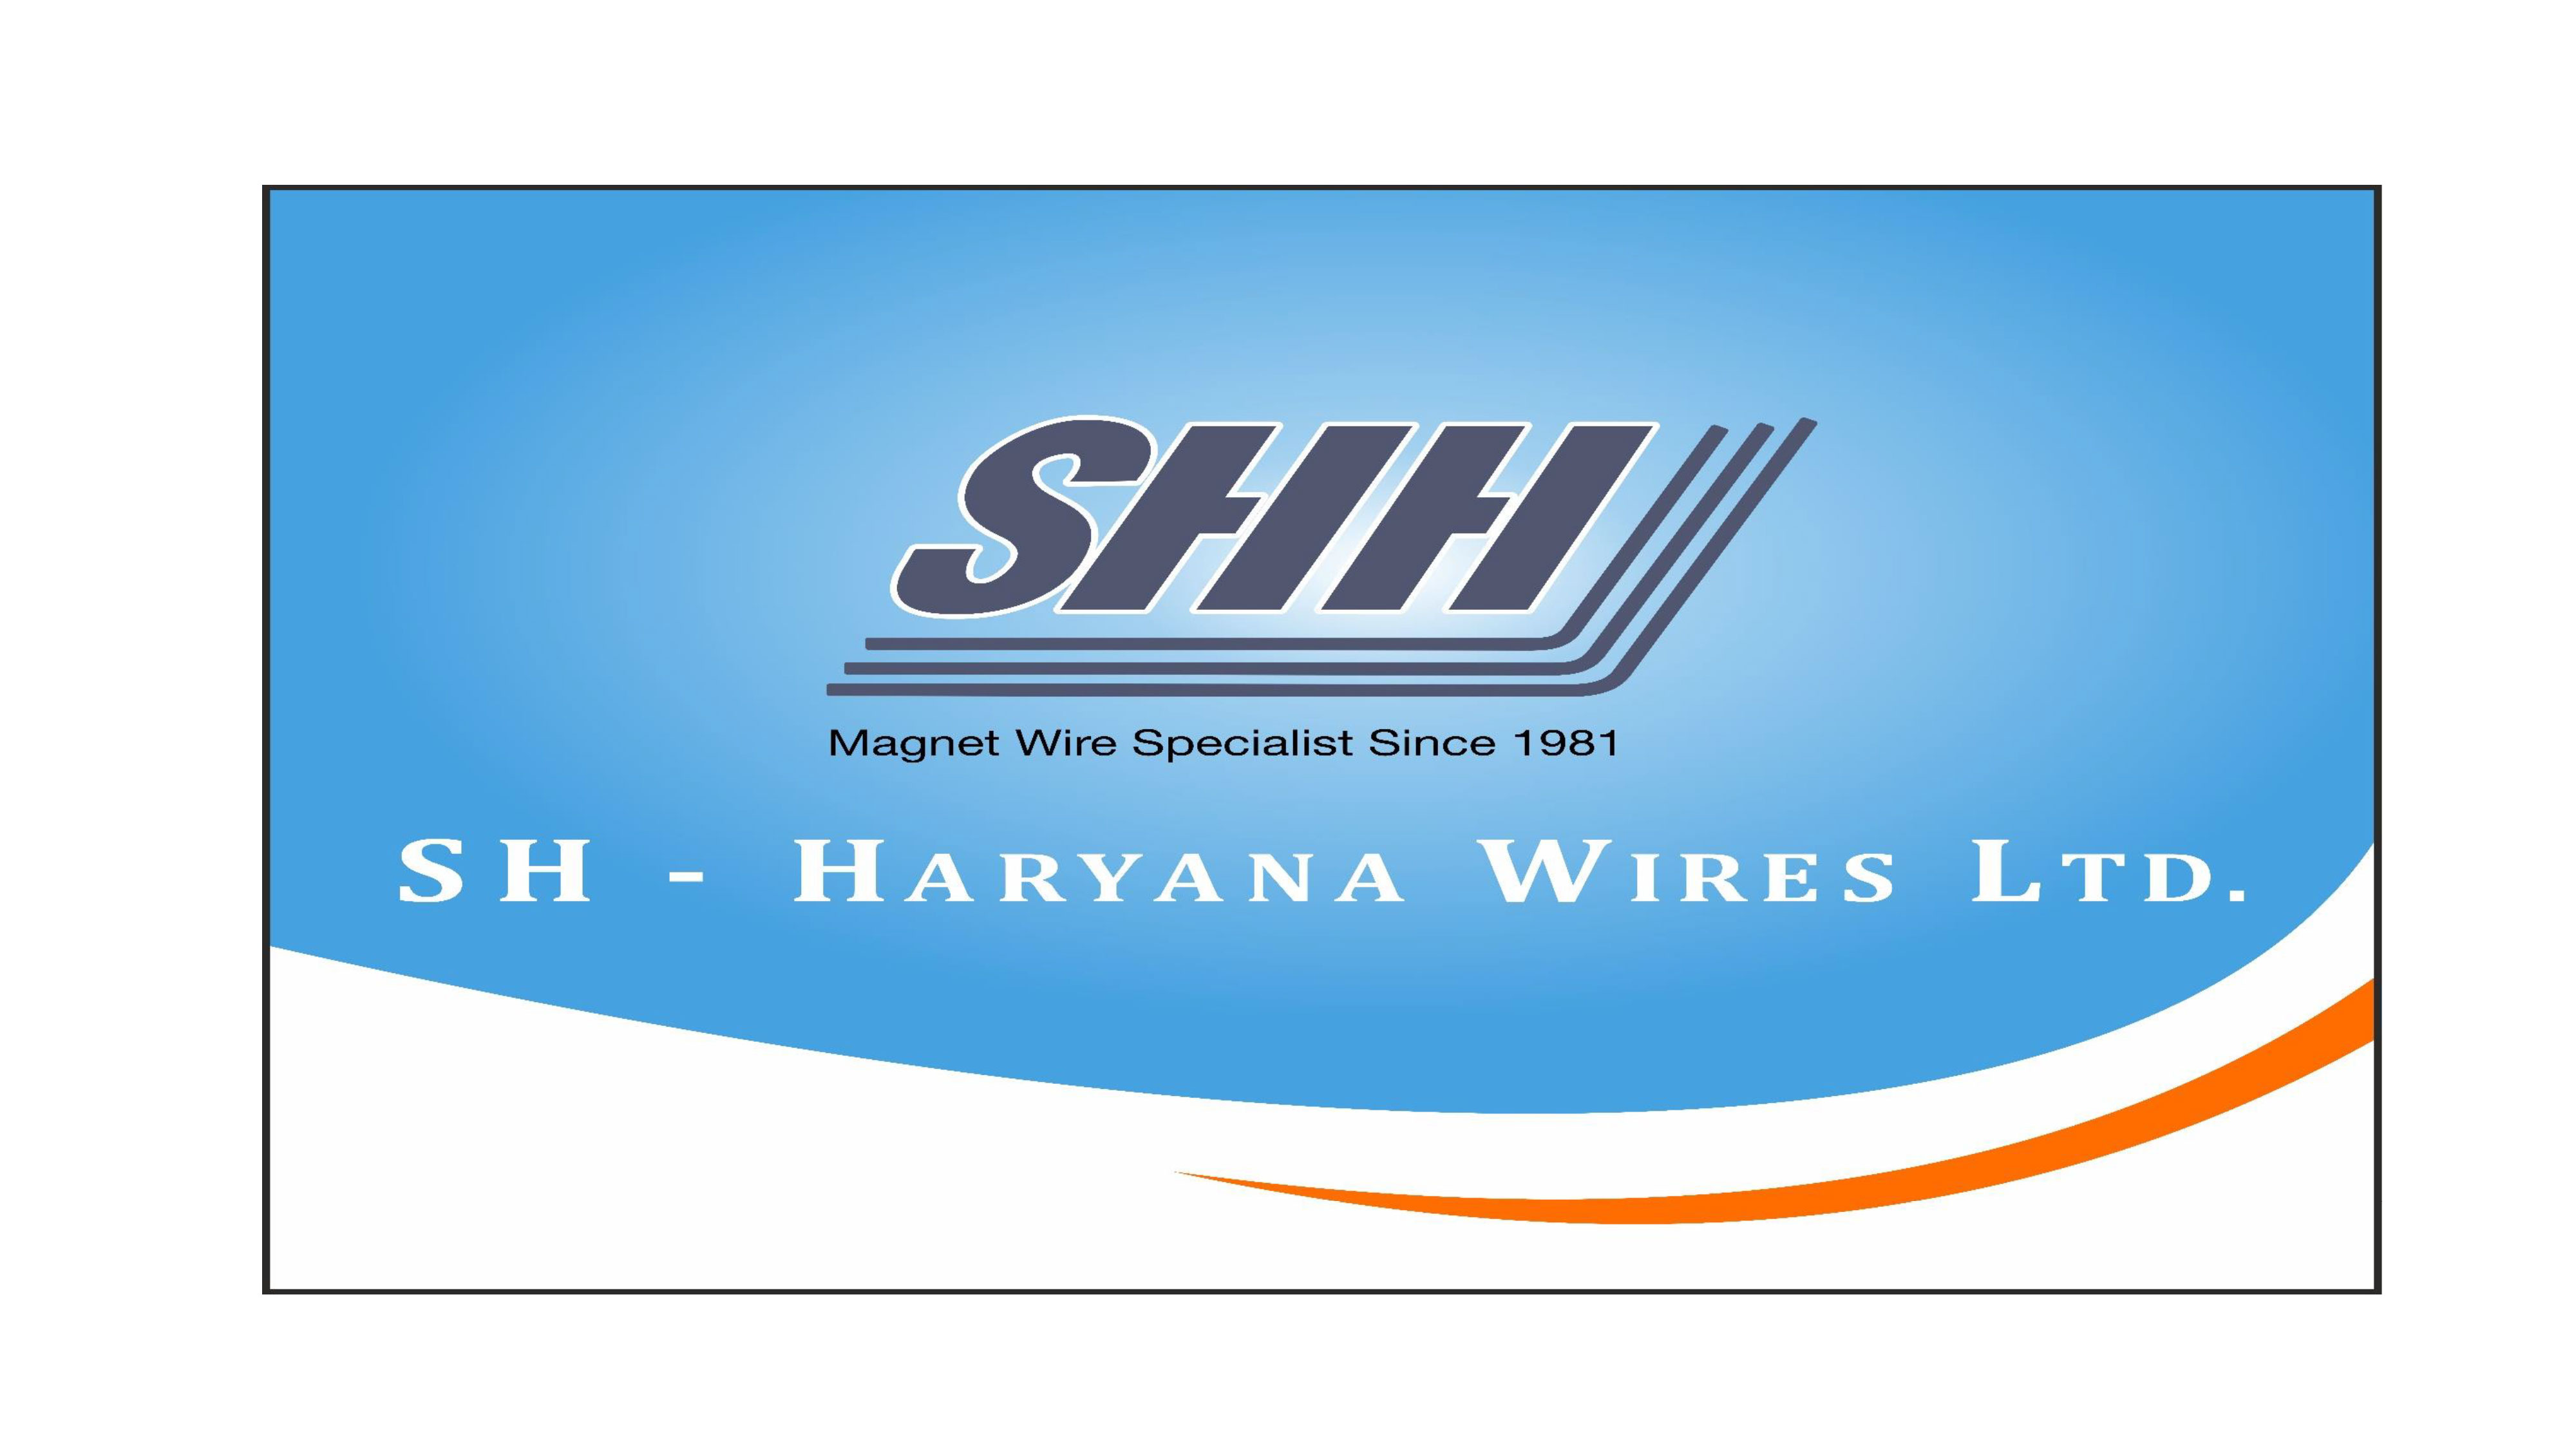 SH-HARYANA WIRES LTD.